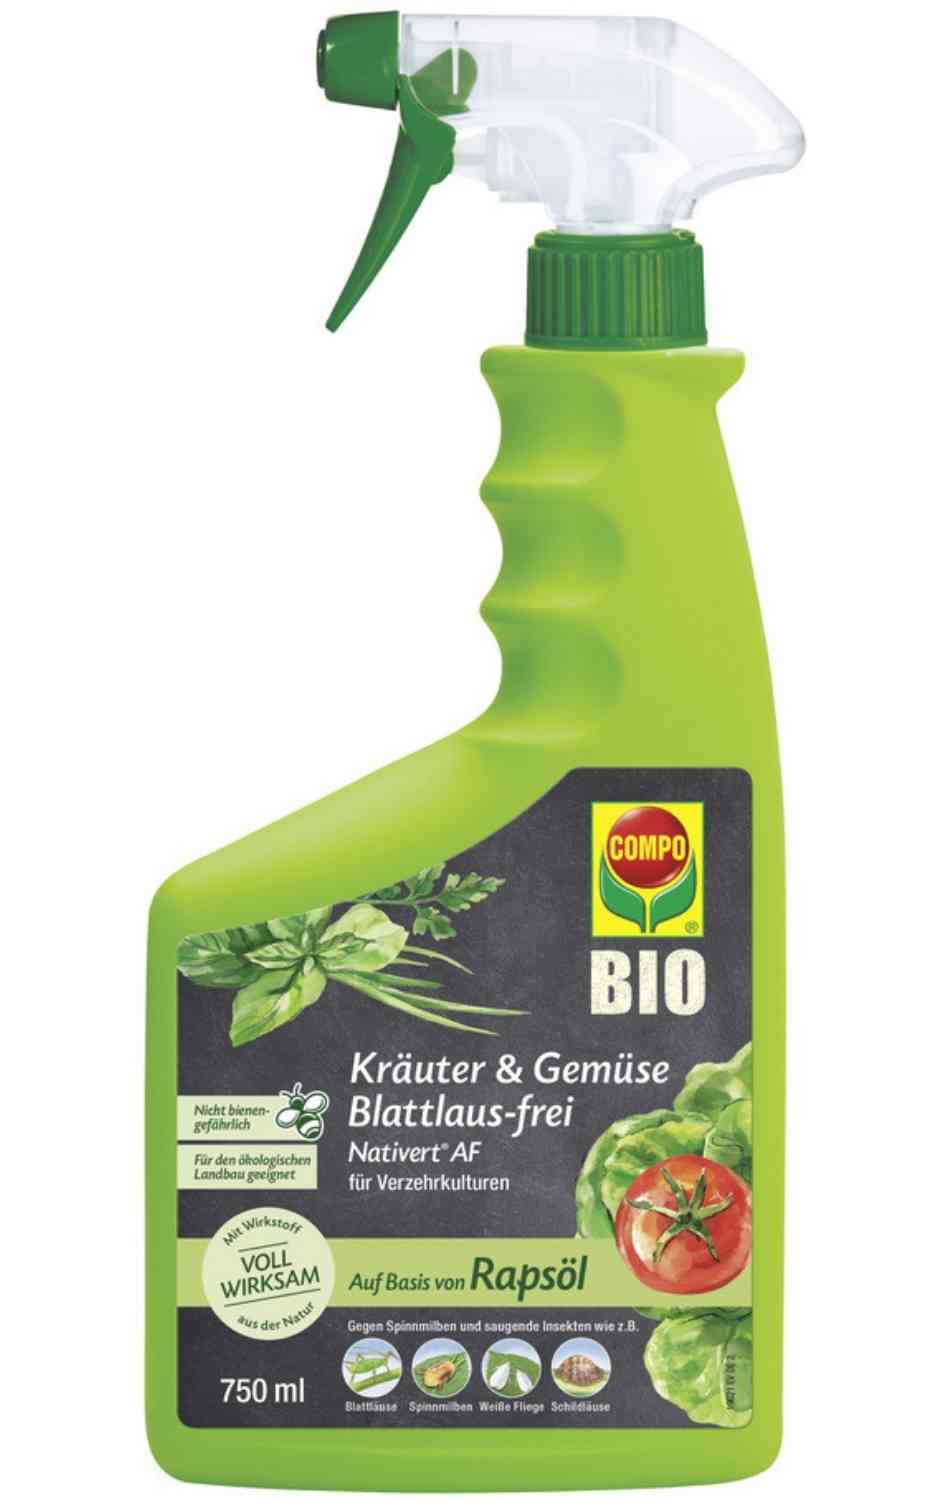 COMPO Kräuter & Gemüse Blattlaus-frei Nativert AF